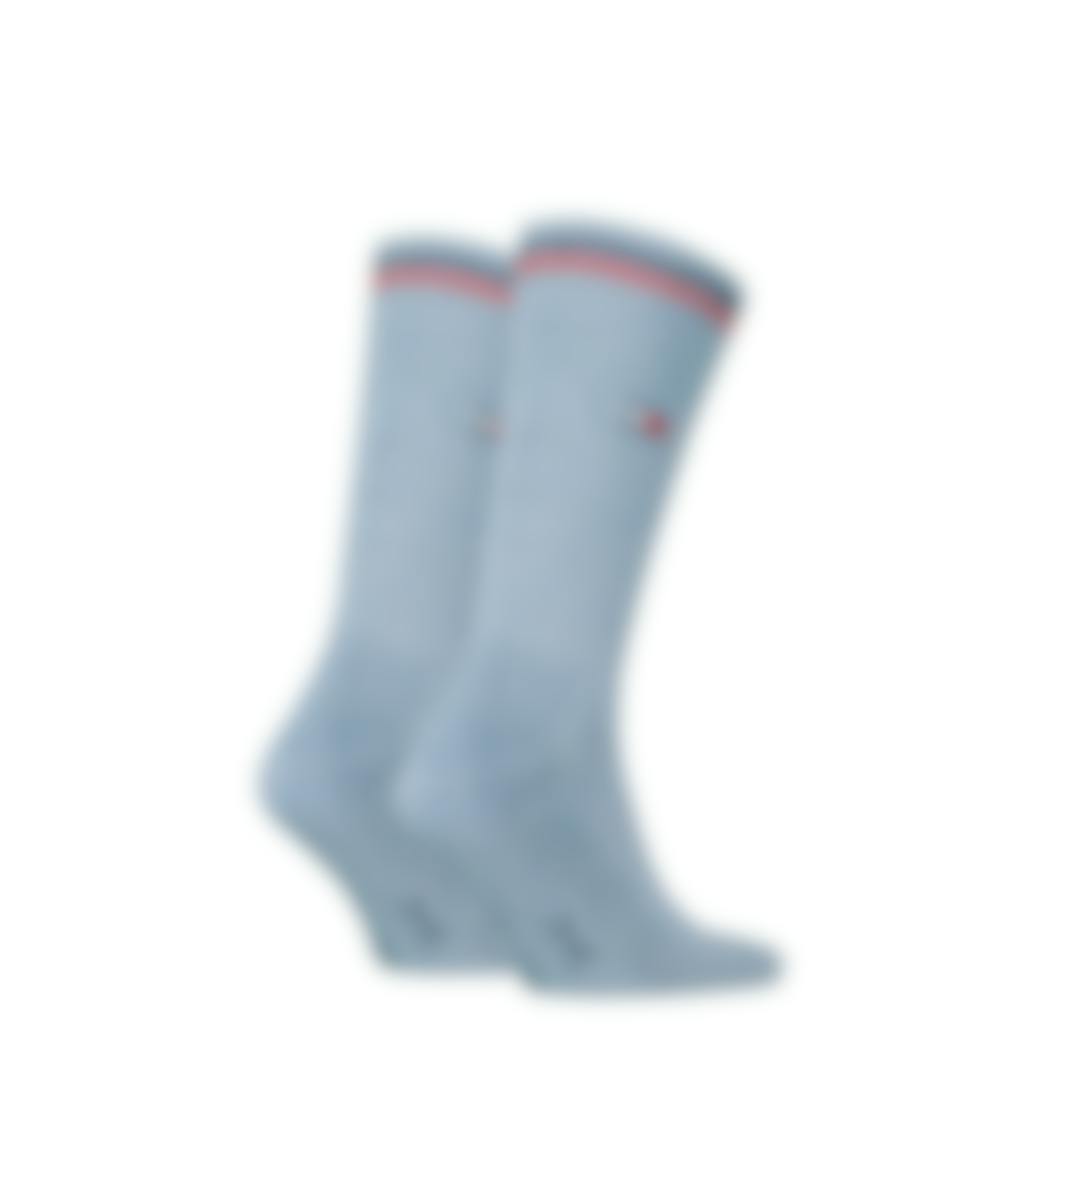 Tommy Hilfiger chaussettes 2 paires Uni Sock Iconic H